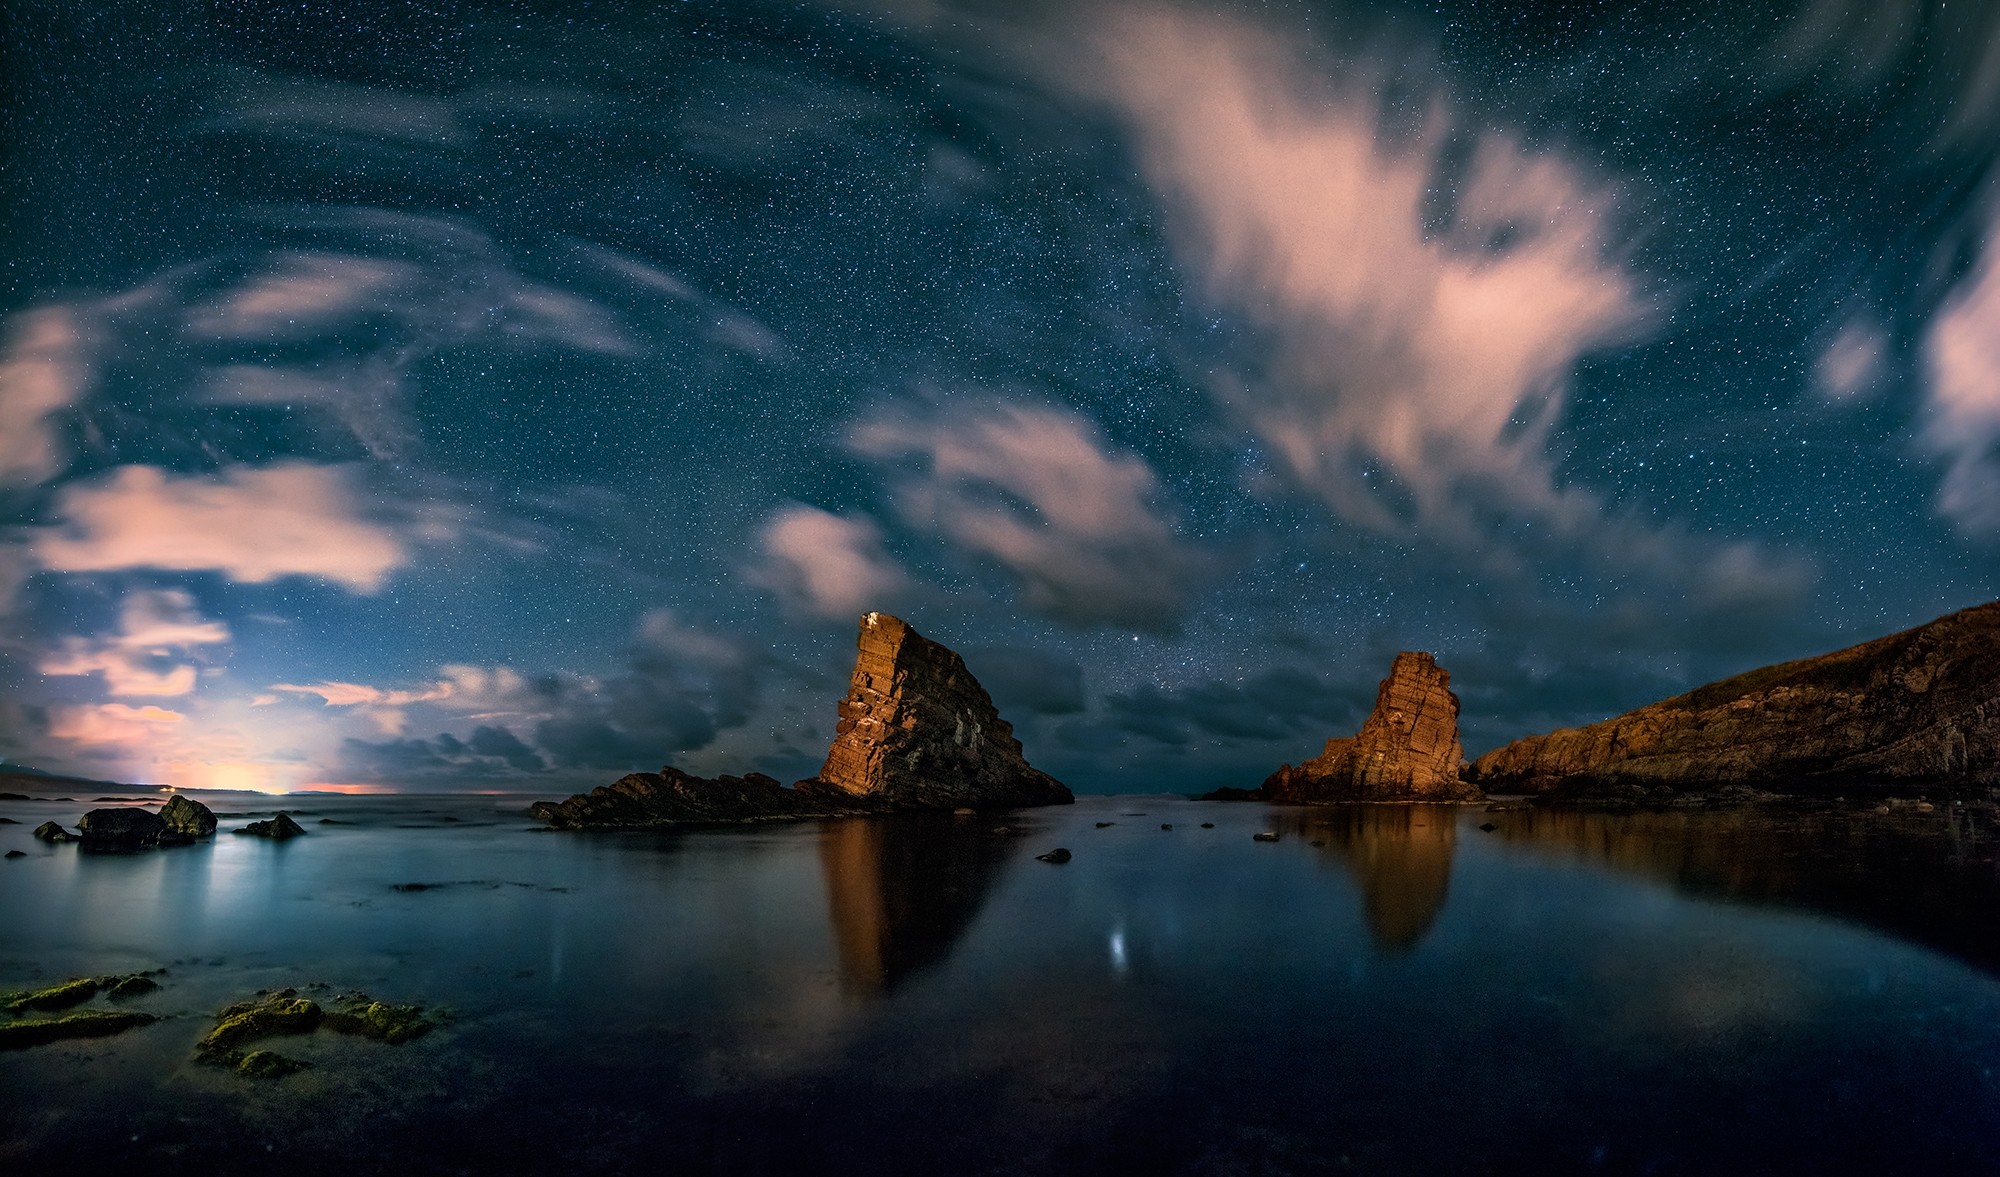 General 2000x1177 landscape nature starry night rocks sea coast clouds calm long exposure Bulgaria sky stars reflection